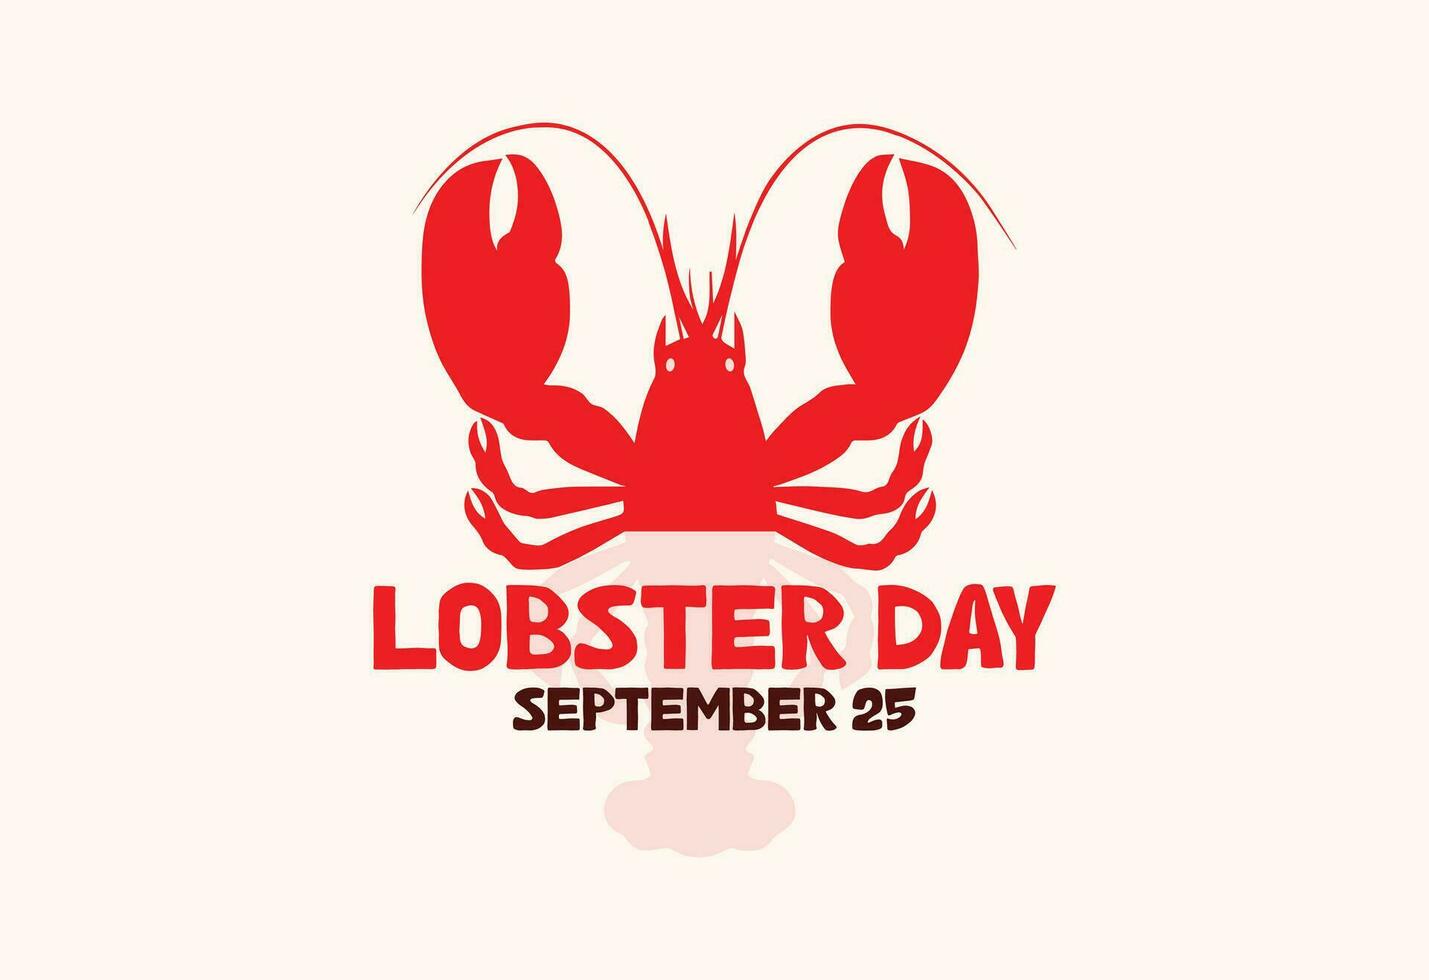 National Lobster Day Vector Design.